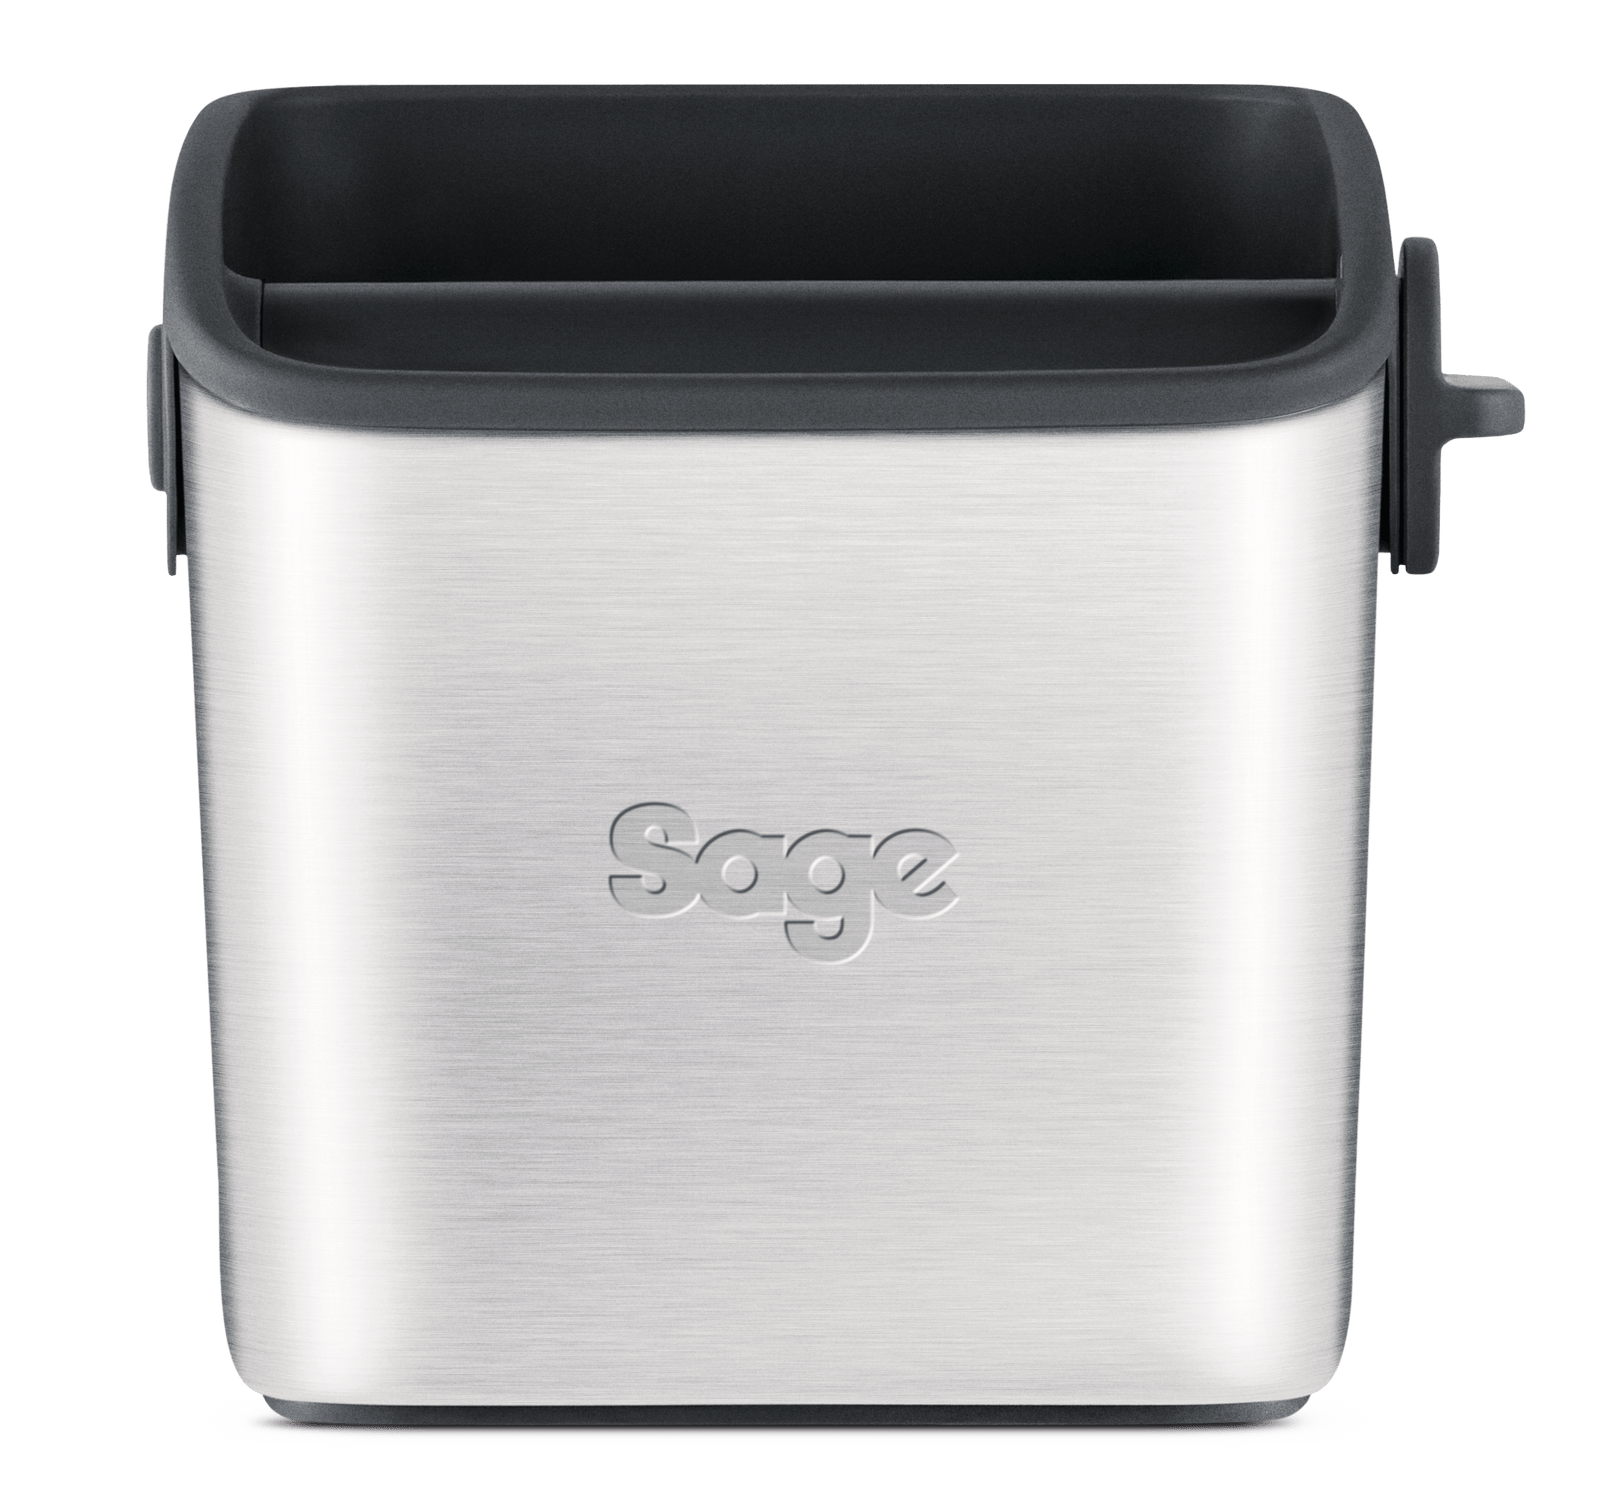 Sage Appliances: Free Knock Box Offer